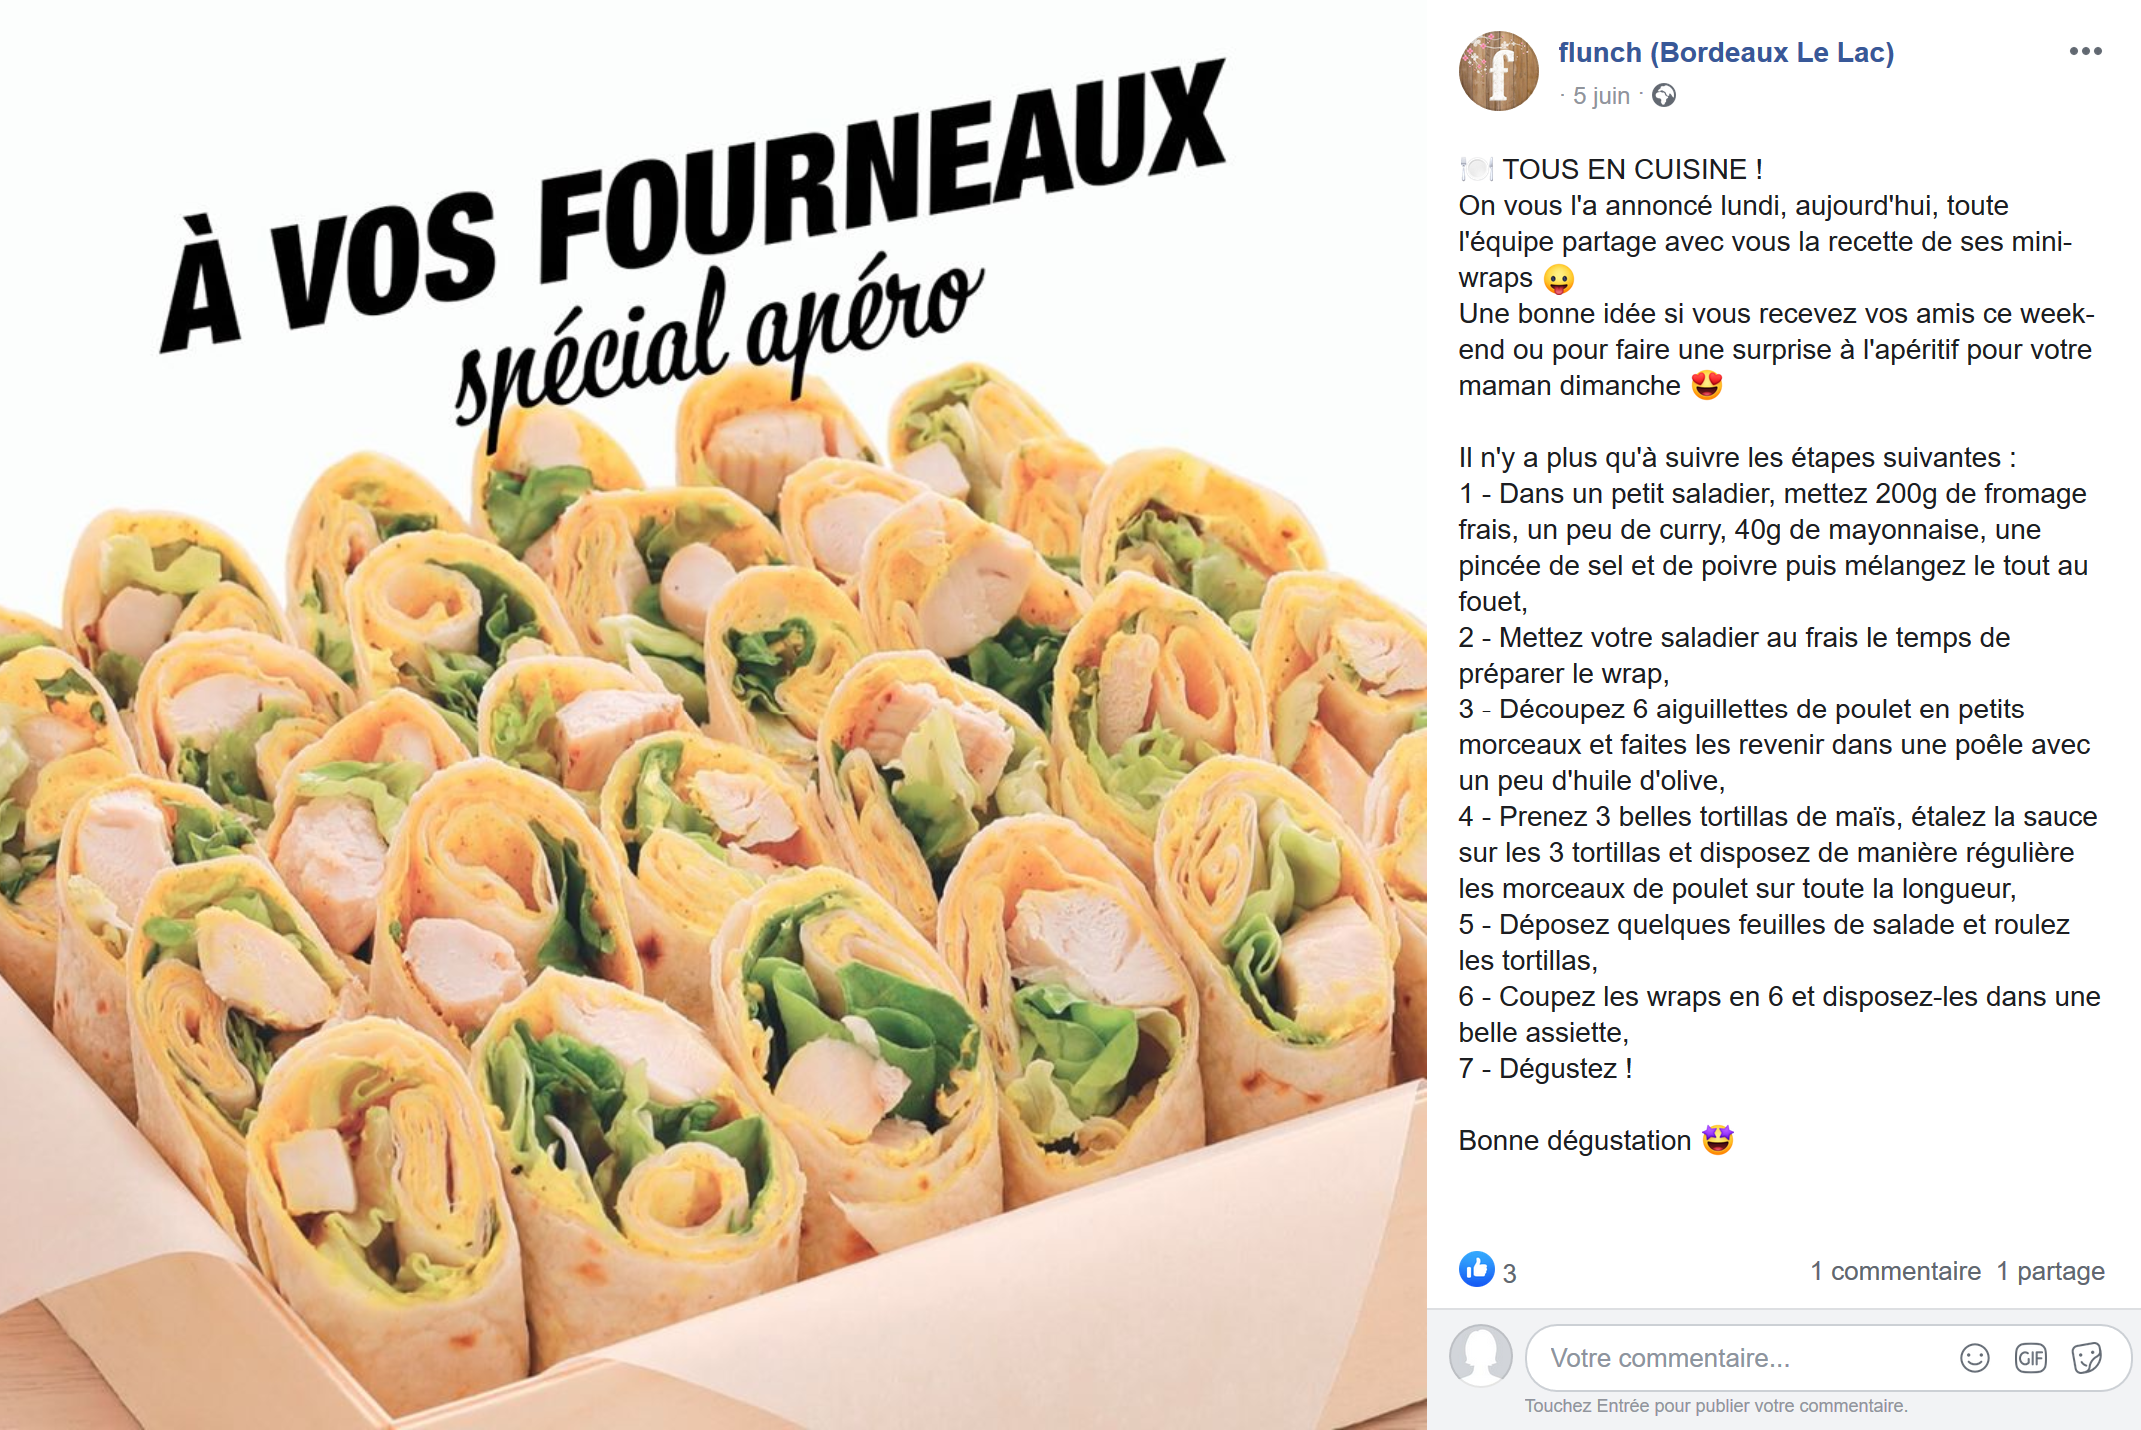 animation-facebook-restaurateur-flunch-bordeaux-lac-gironde